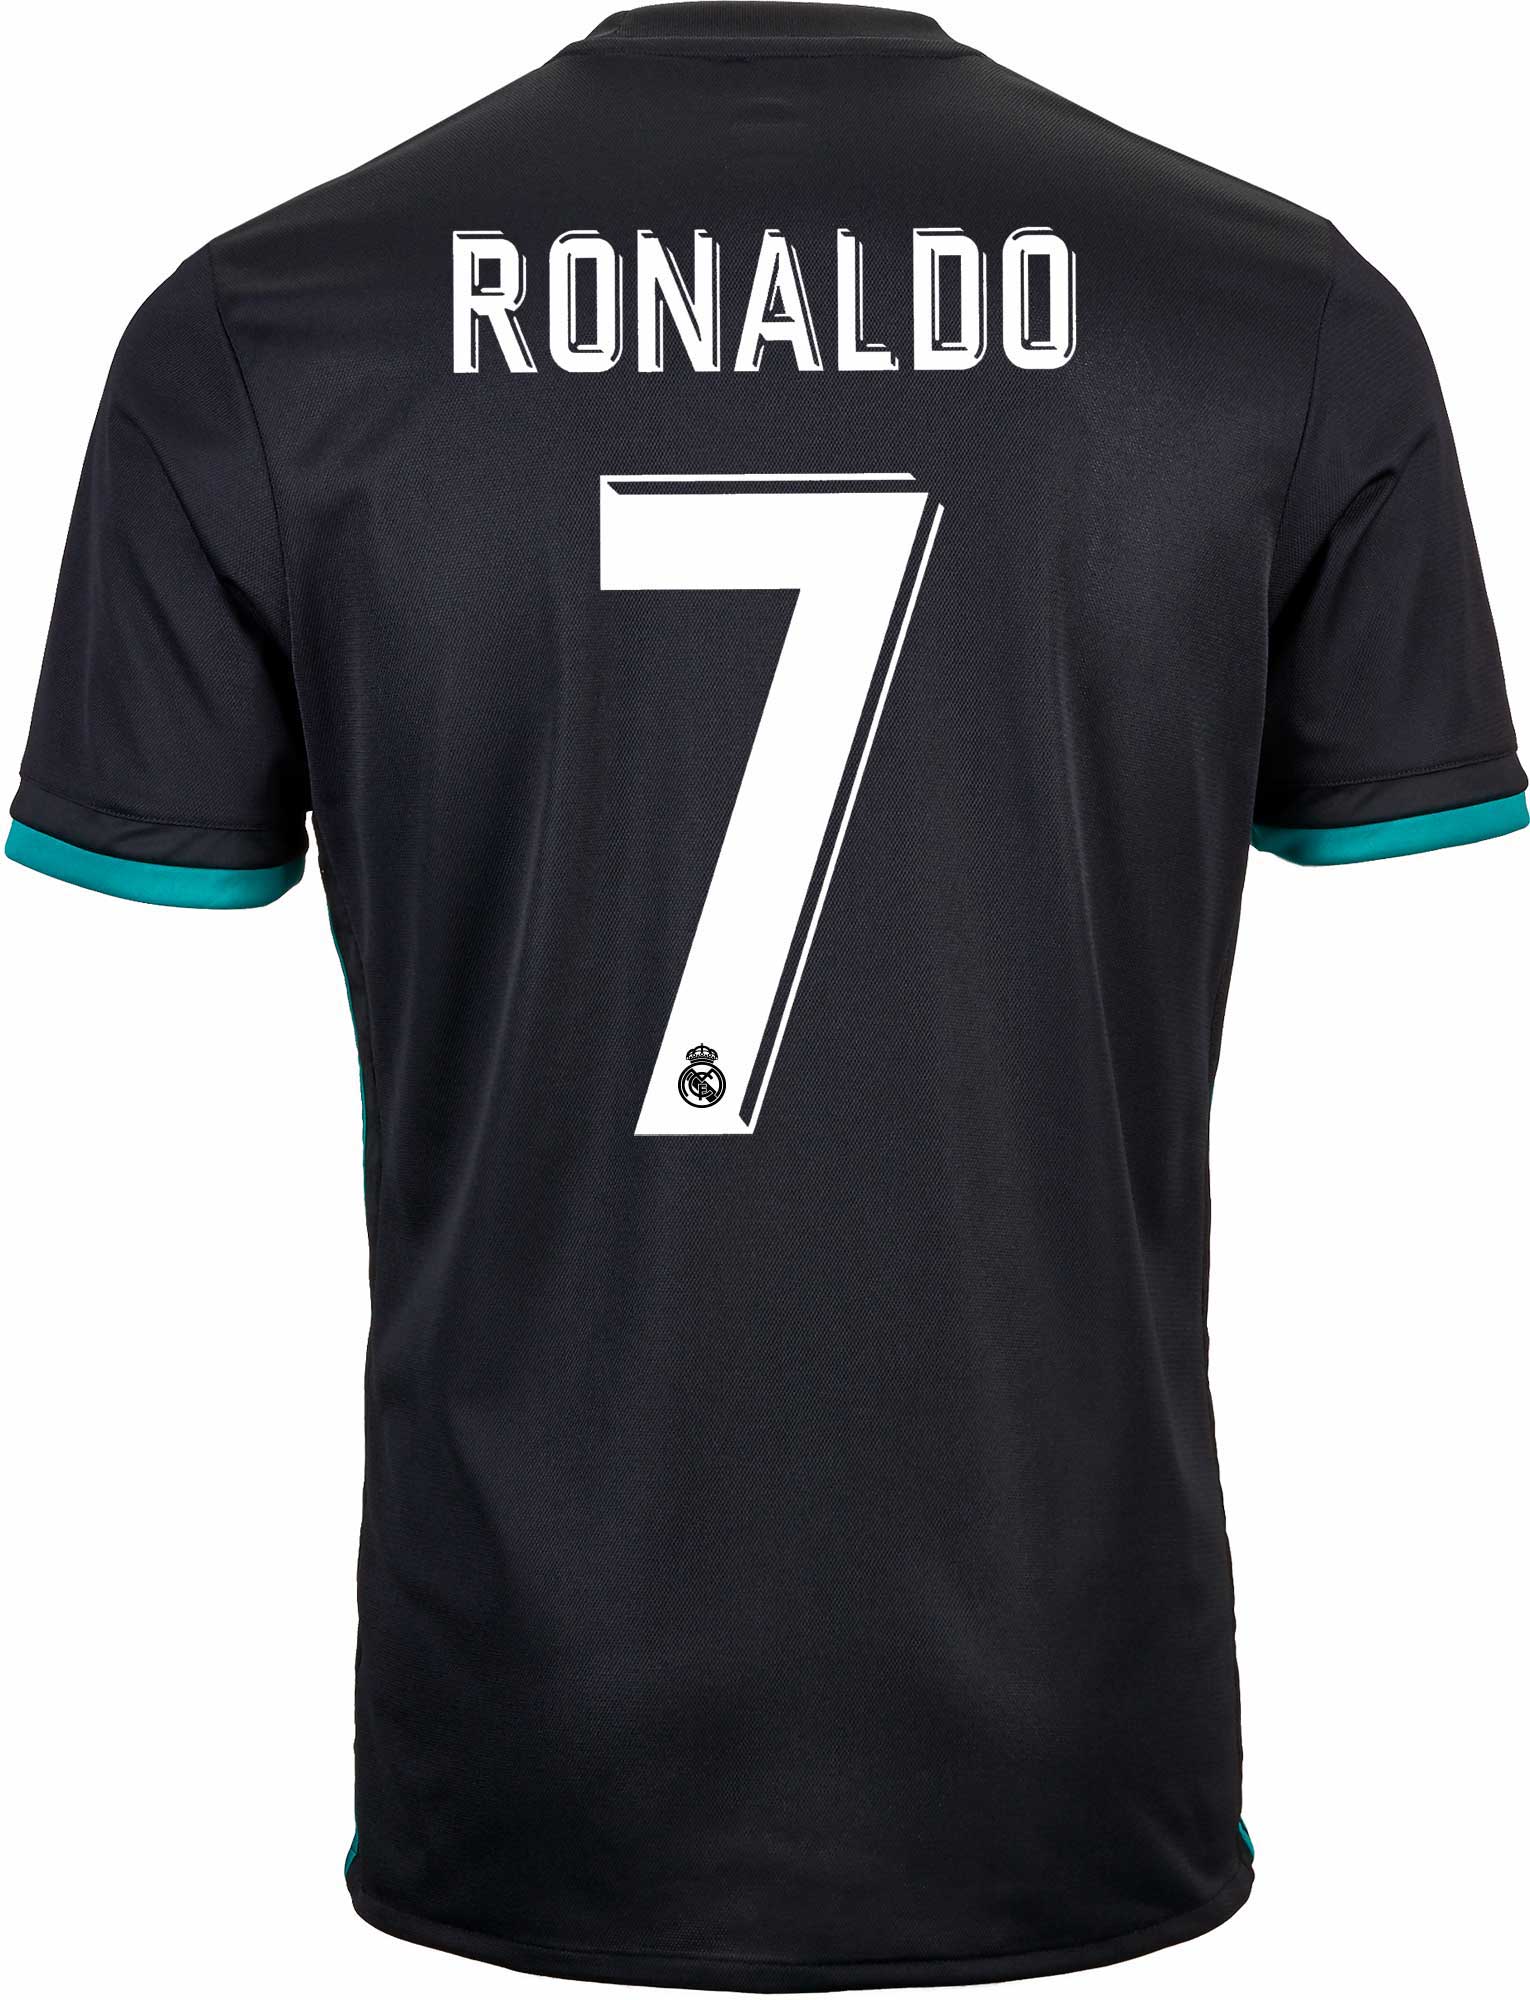 2017/18 adidas Kids Cristiano Ronaldo 